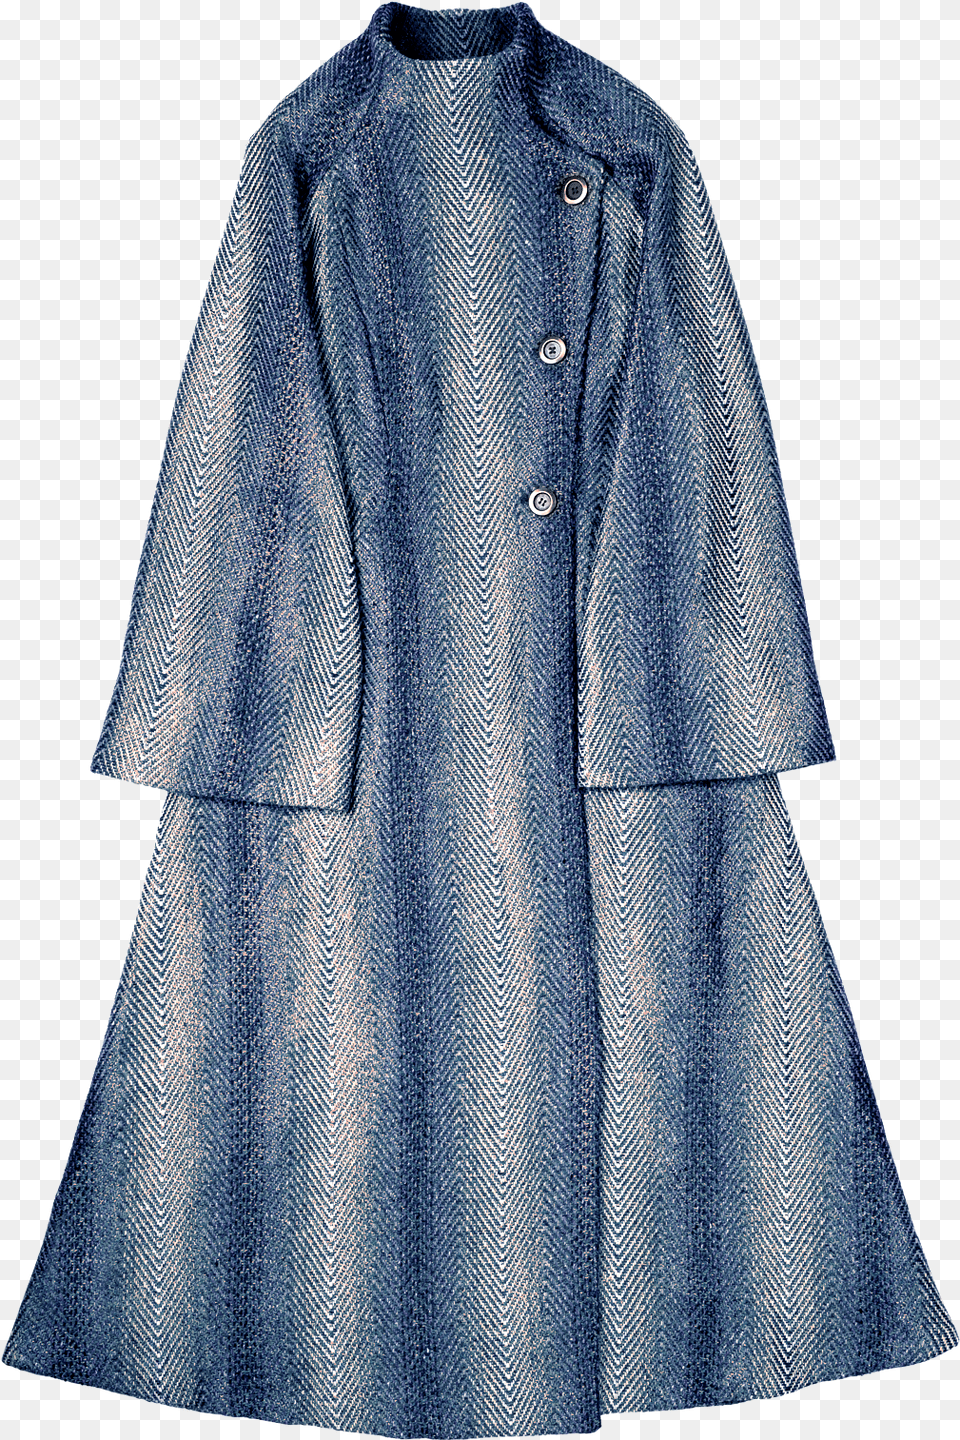 Blue Chevron Pattern Long Coat Overcoat, Clothing, Pants, Trench Coat Png